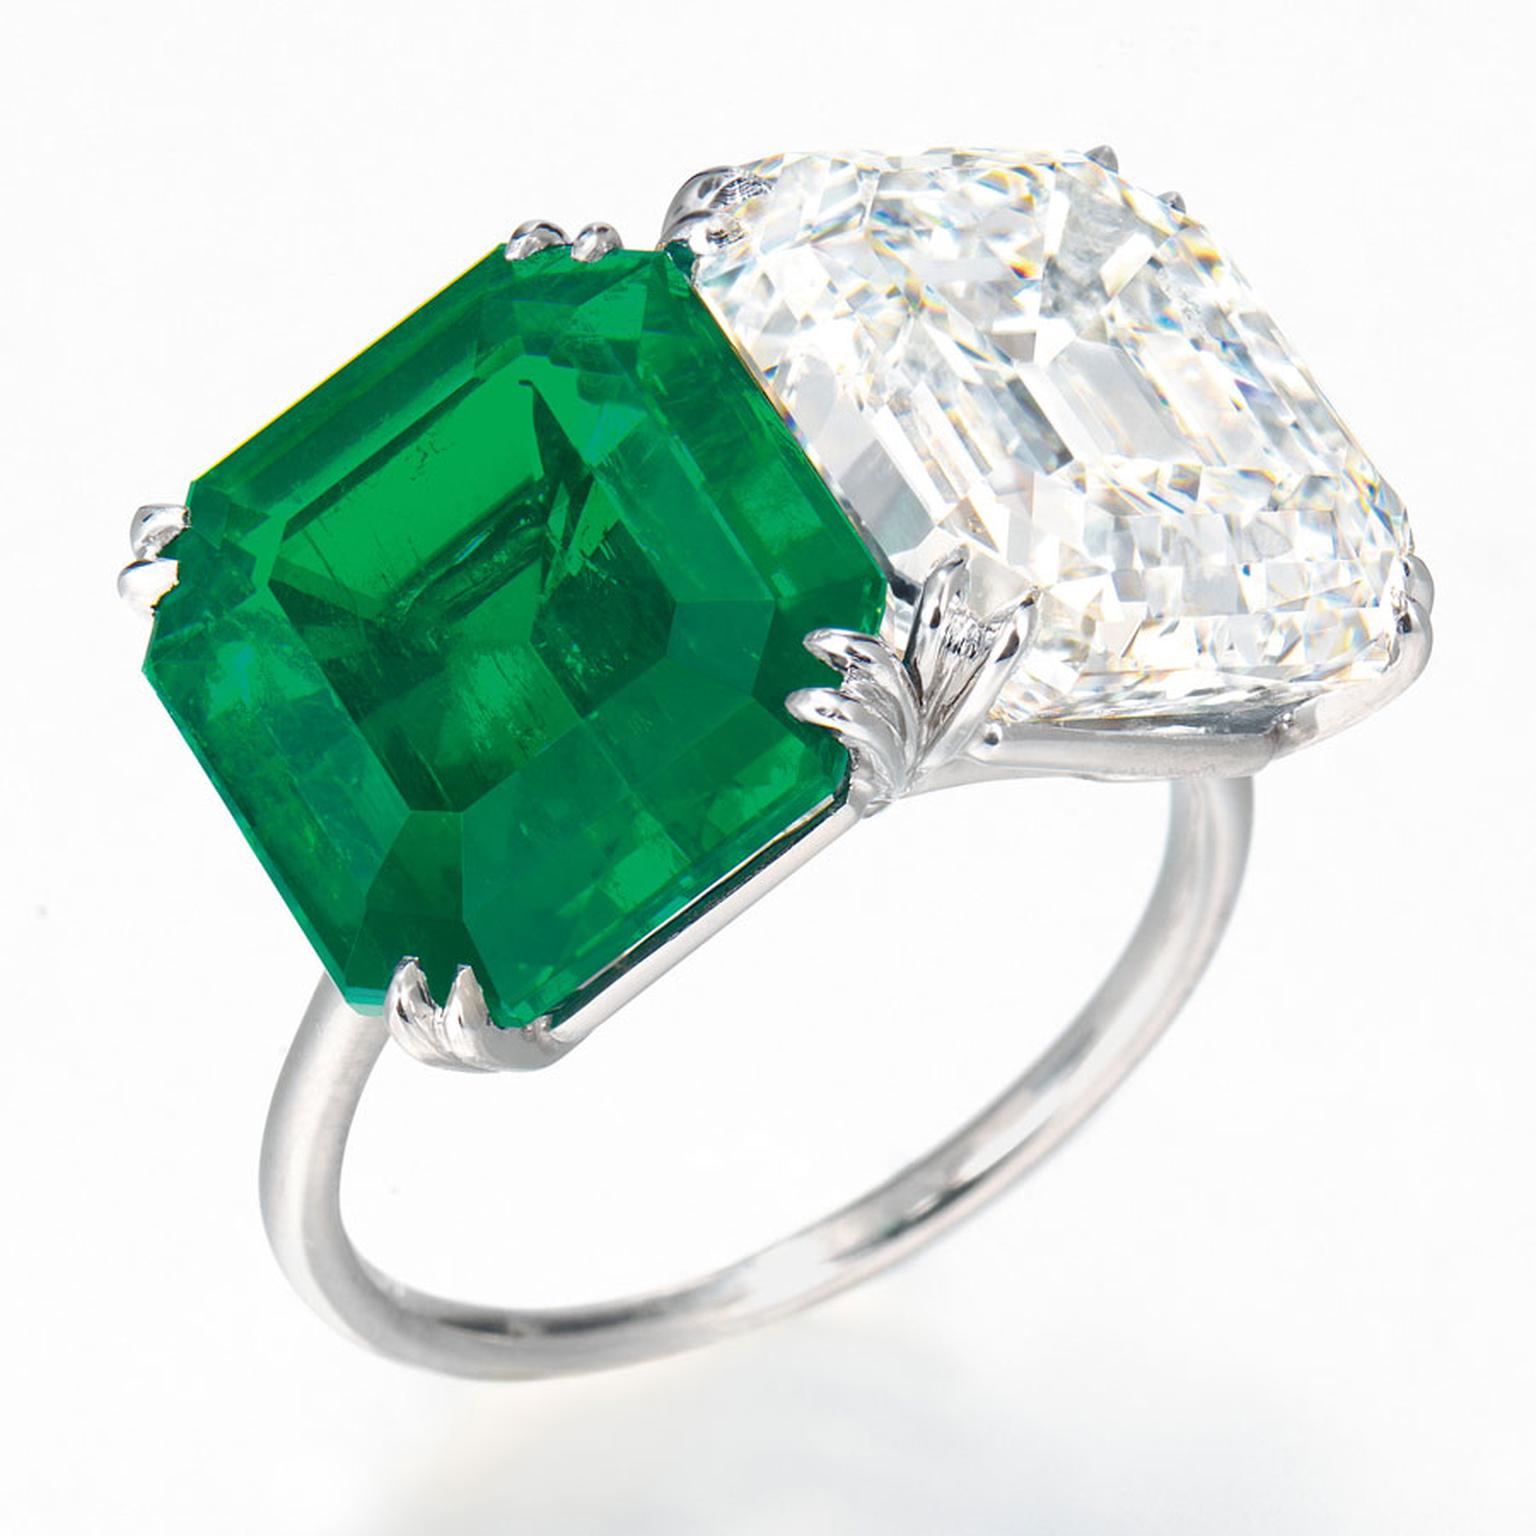 Christies-Emerald-ring.jpg